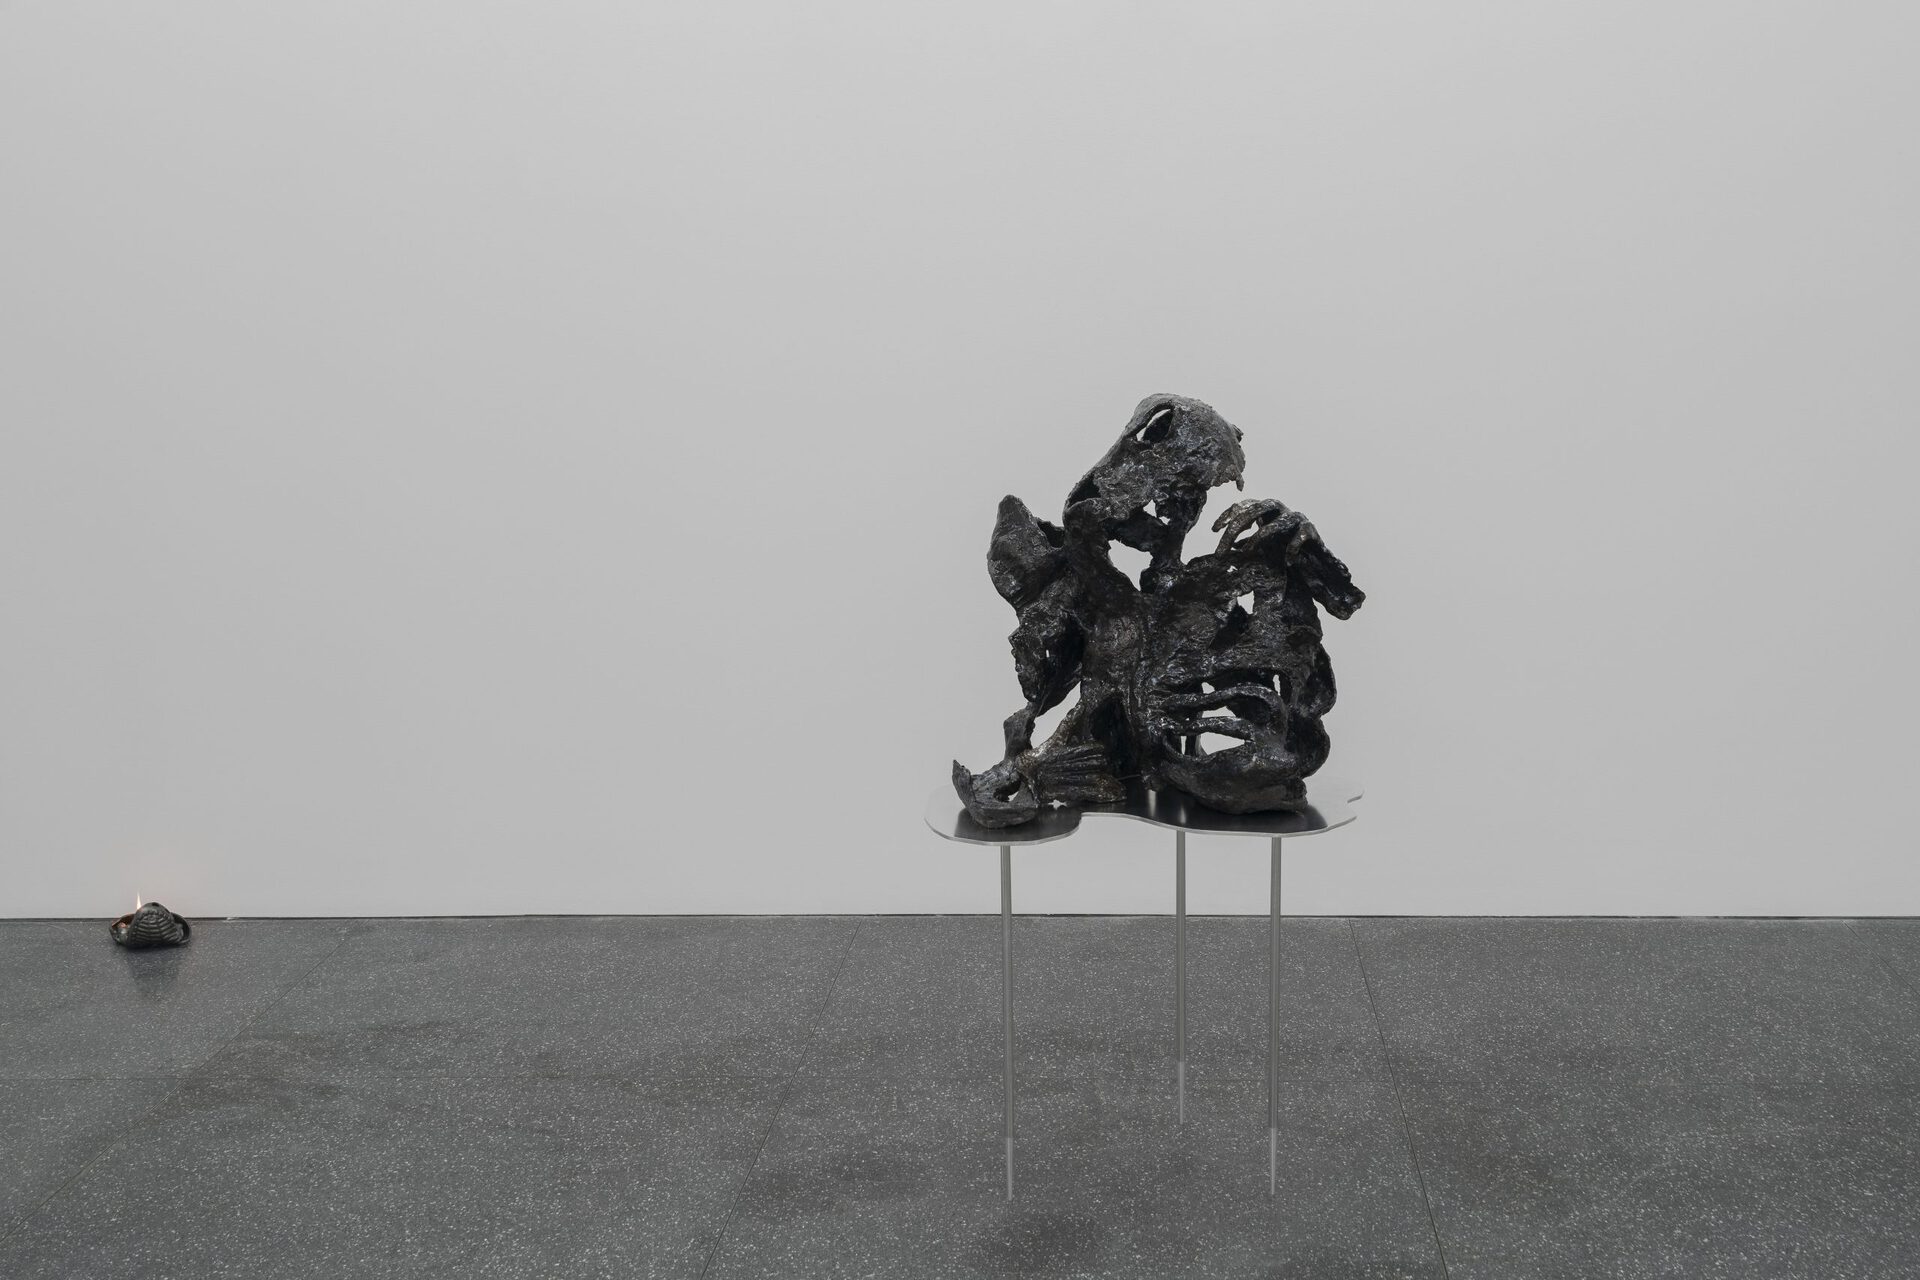 Glove puppet for the soul, 2020, glazed ceramic and aluminium, 121 x 60 x 55 cm